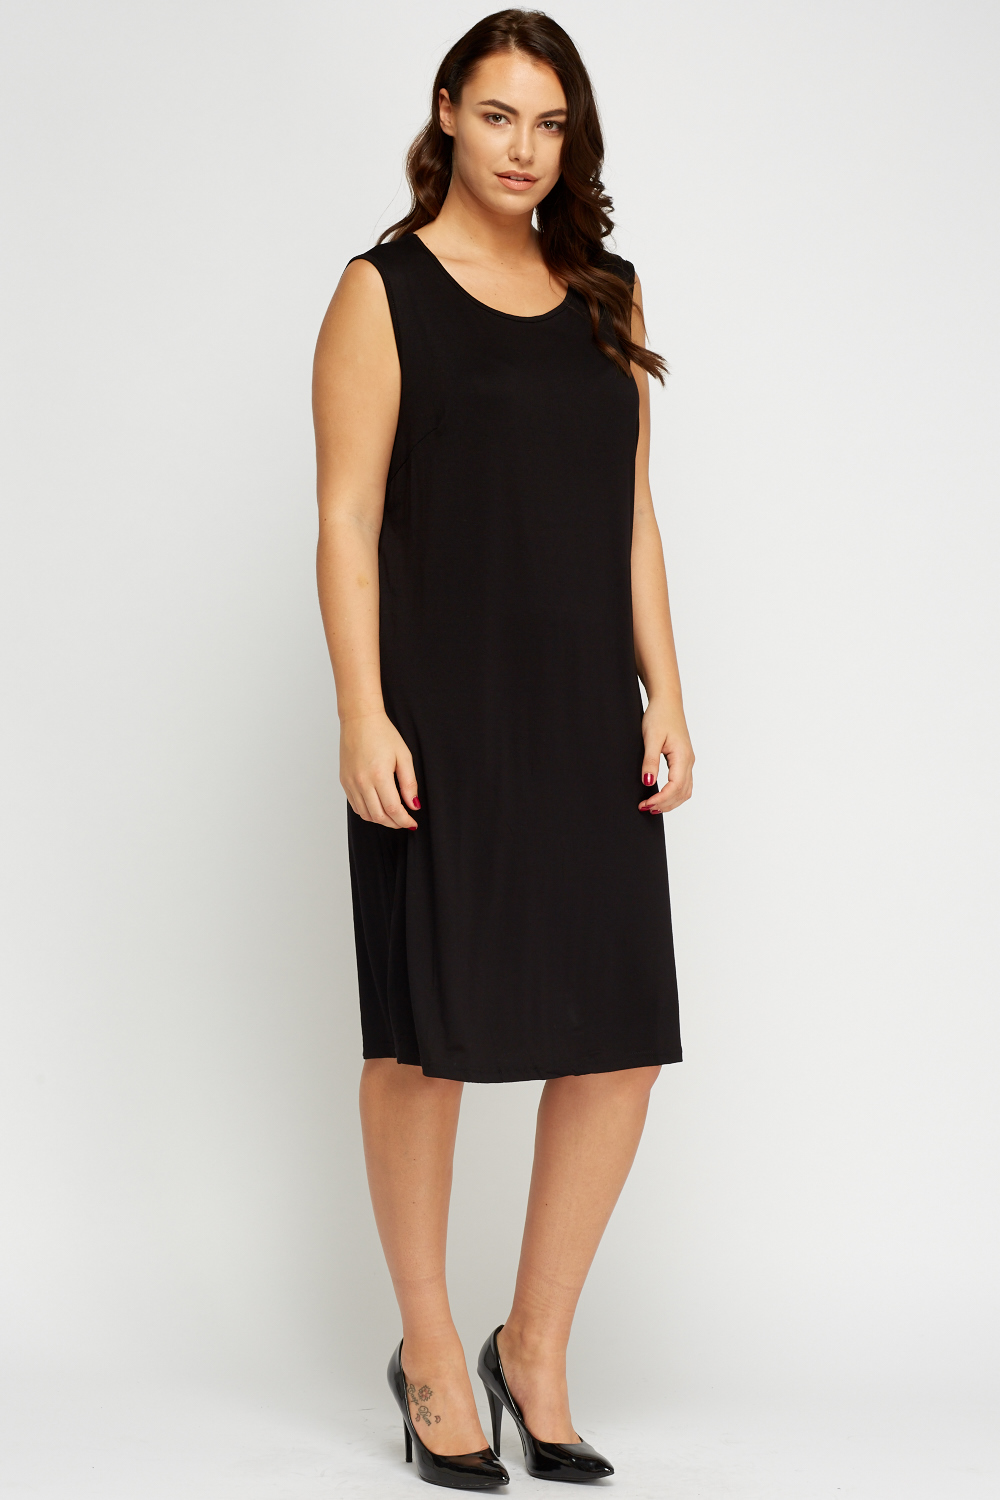 Sleeveless Long Black Dress - Just $7